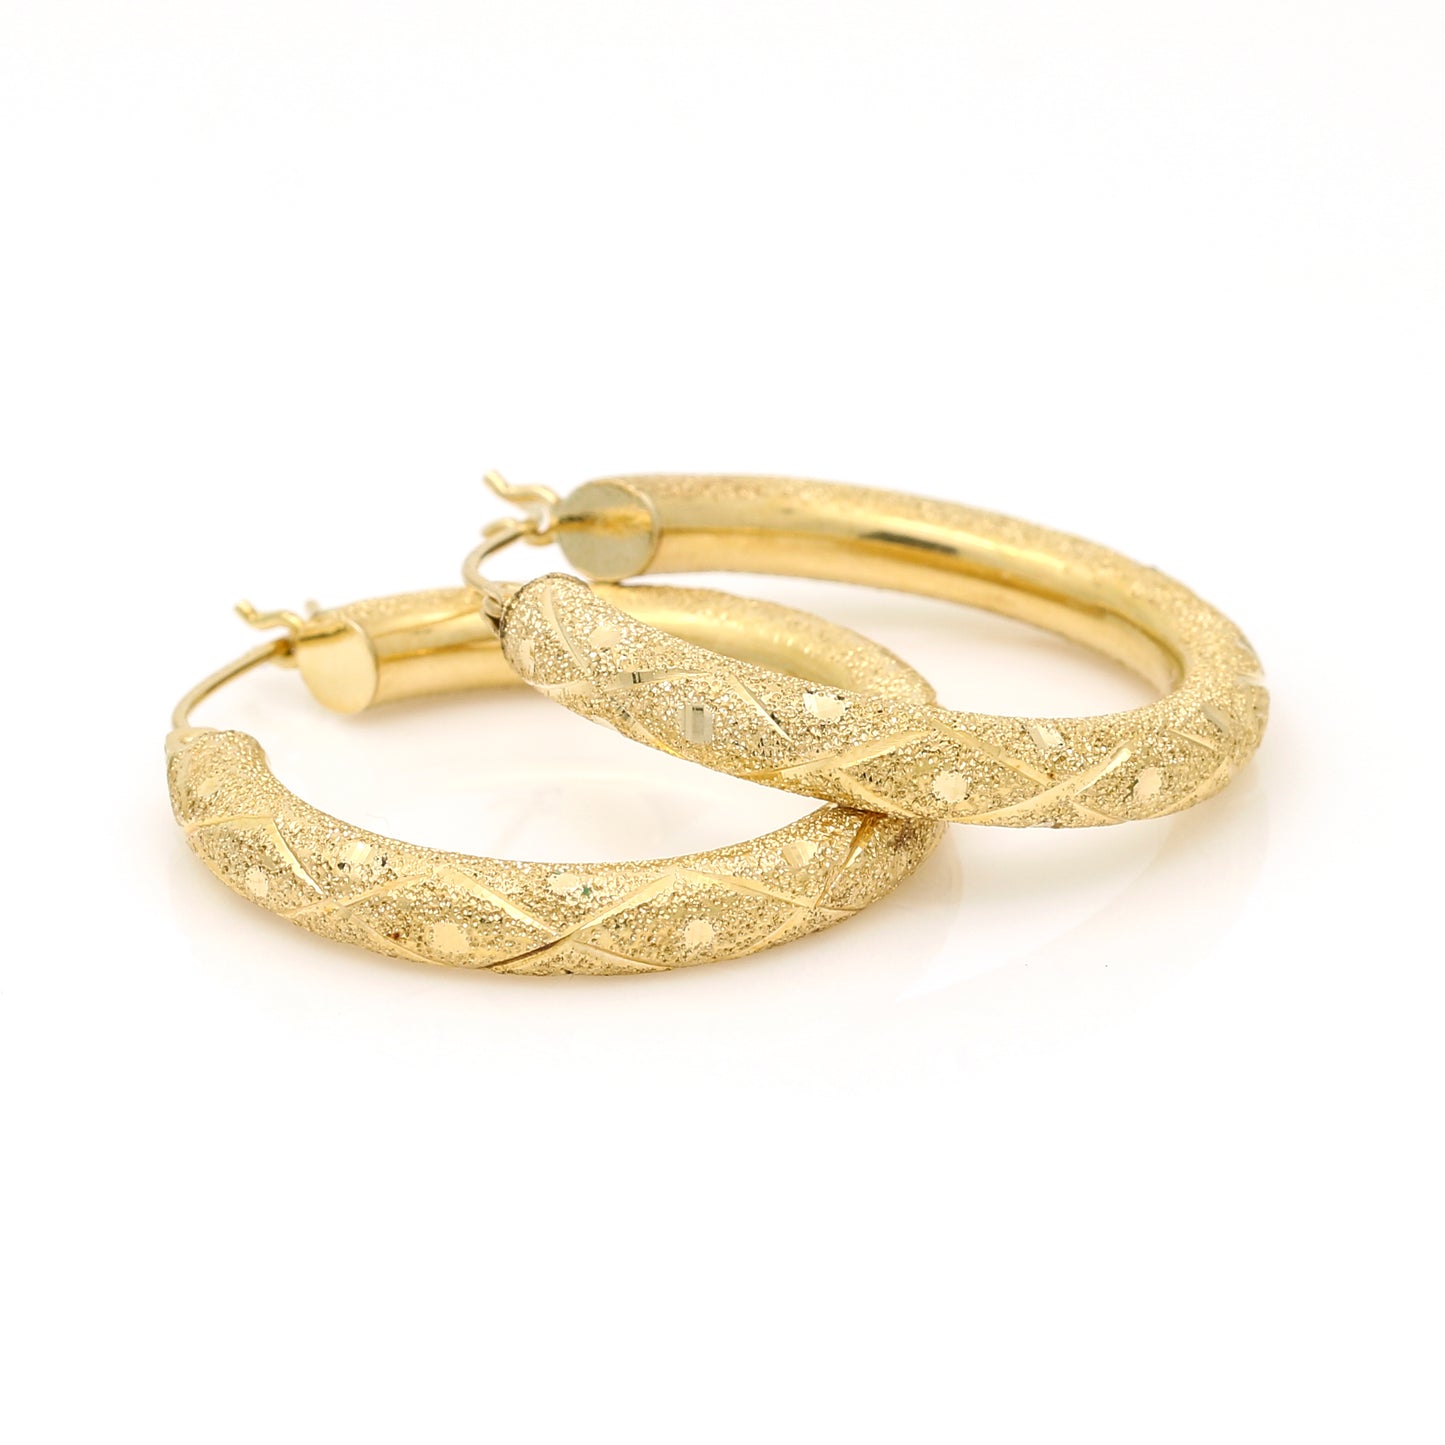 Women's Florentine Finish Tube Hoop Earrings in 14k Yellow Gold